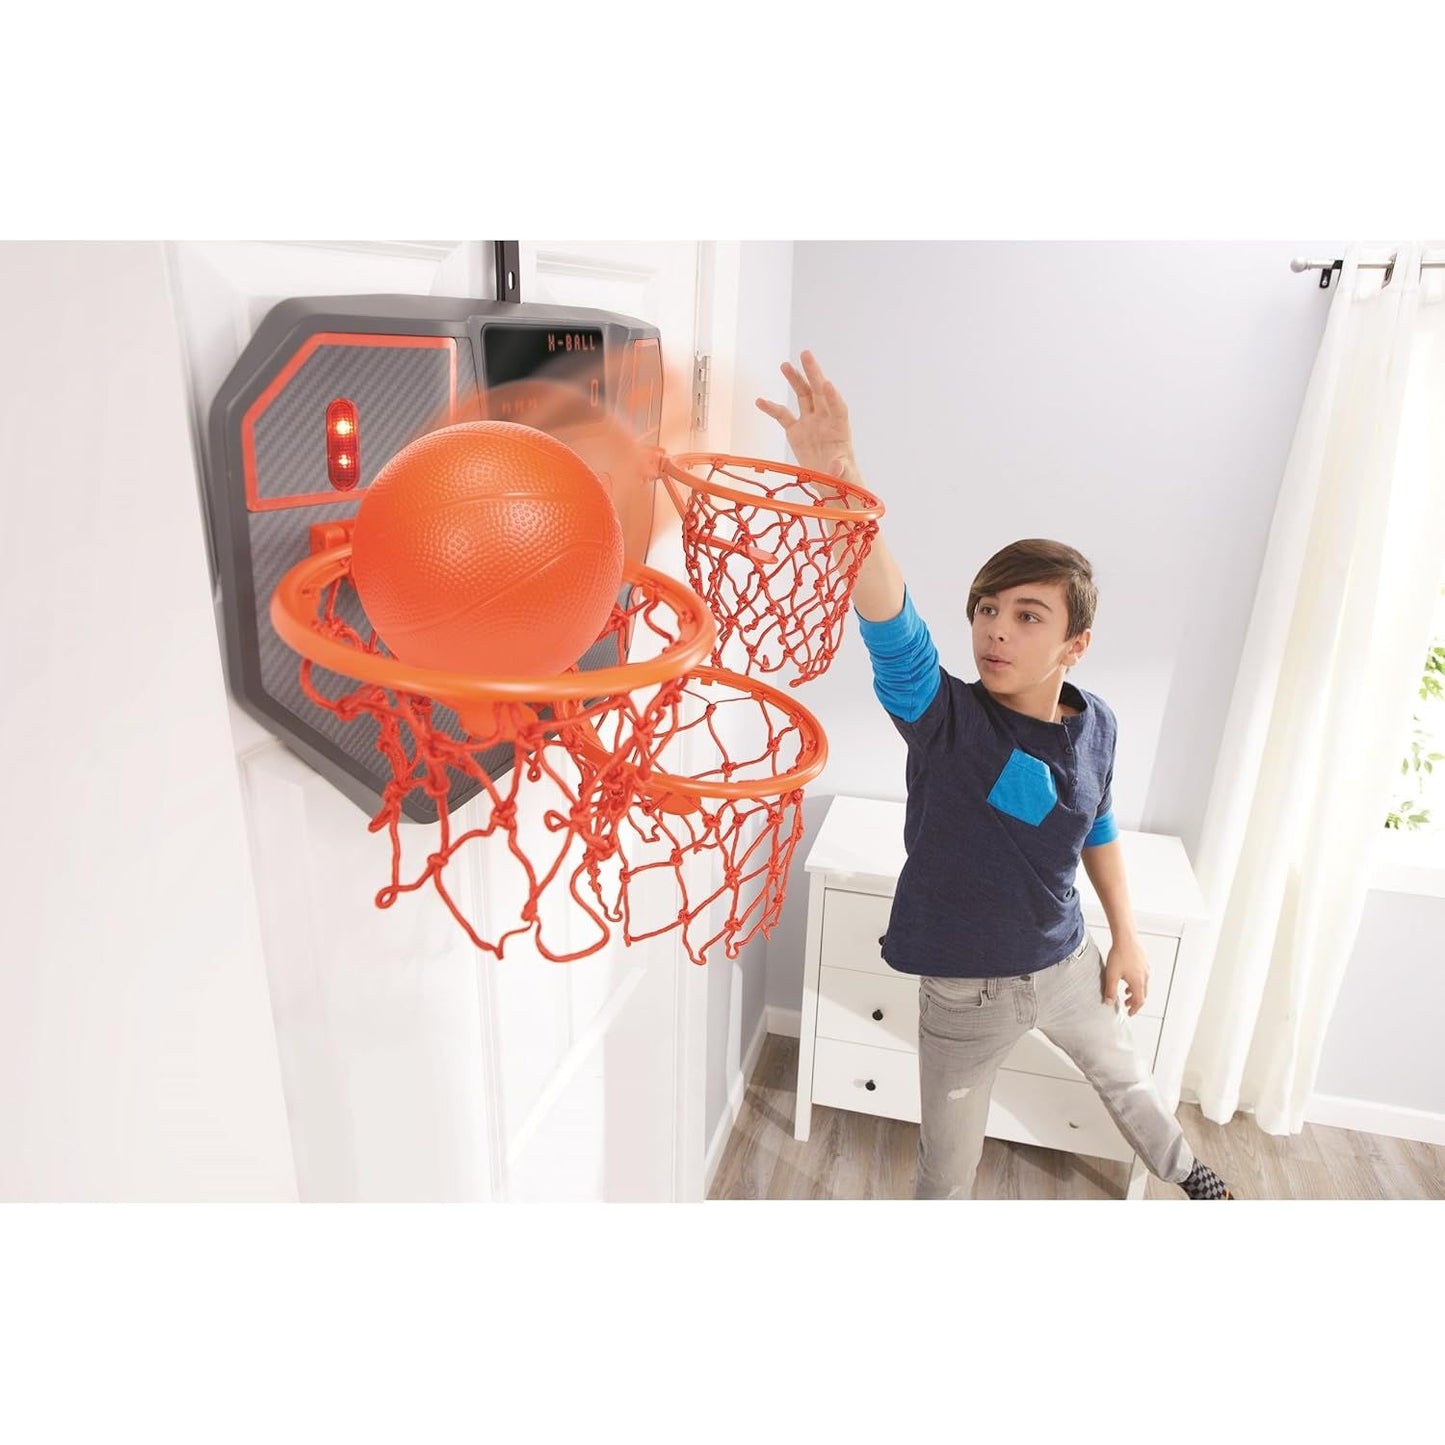 Little Tikes Triple Shot Indoor Basketball Play Set